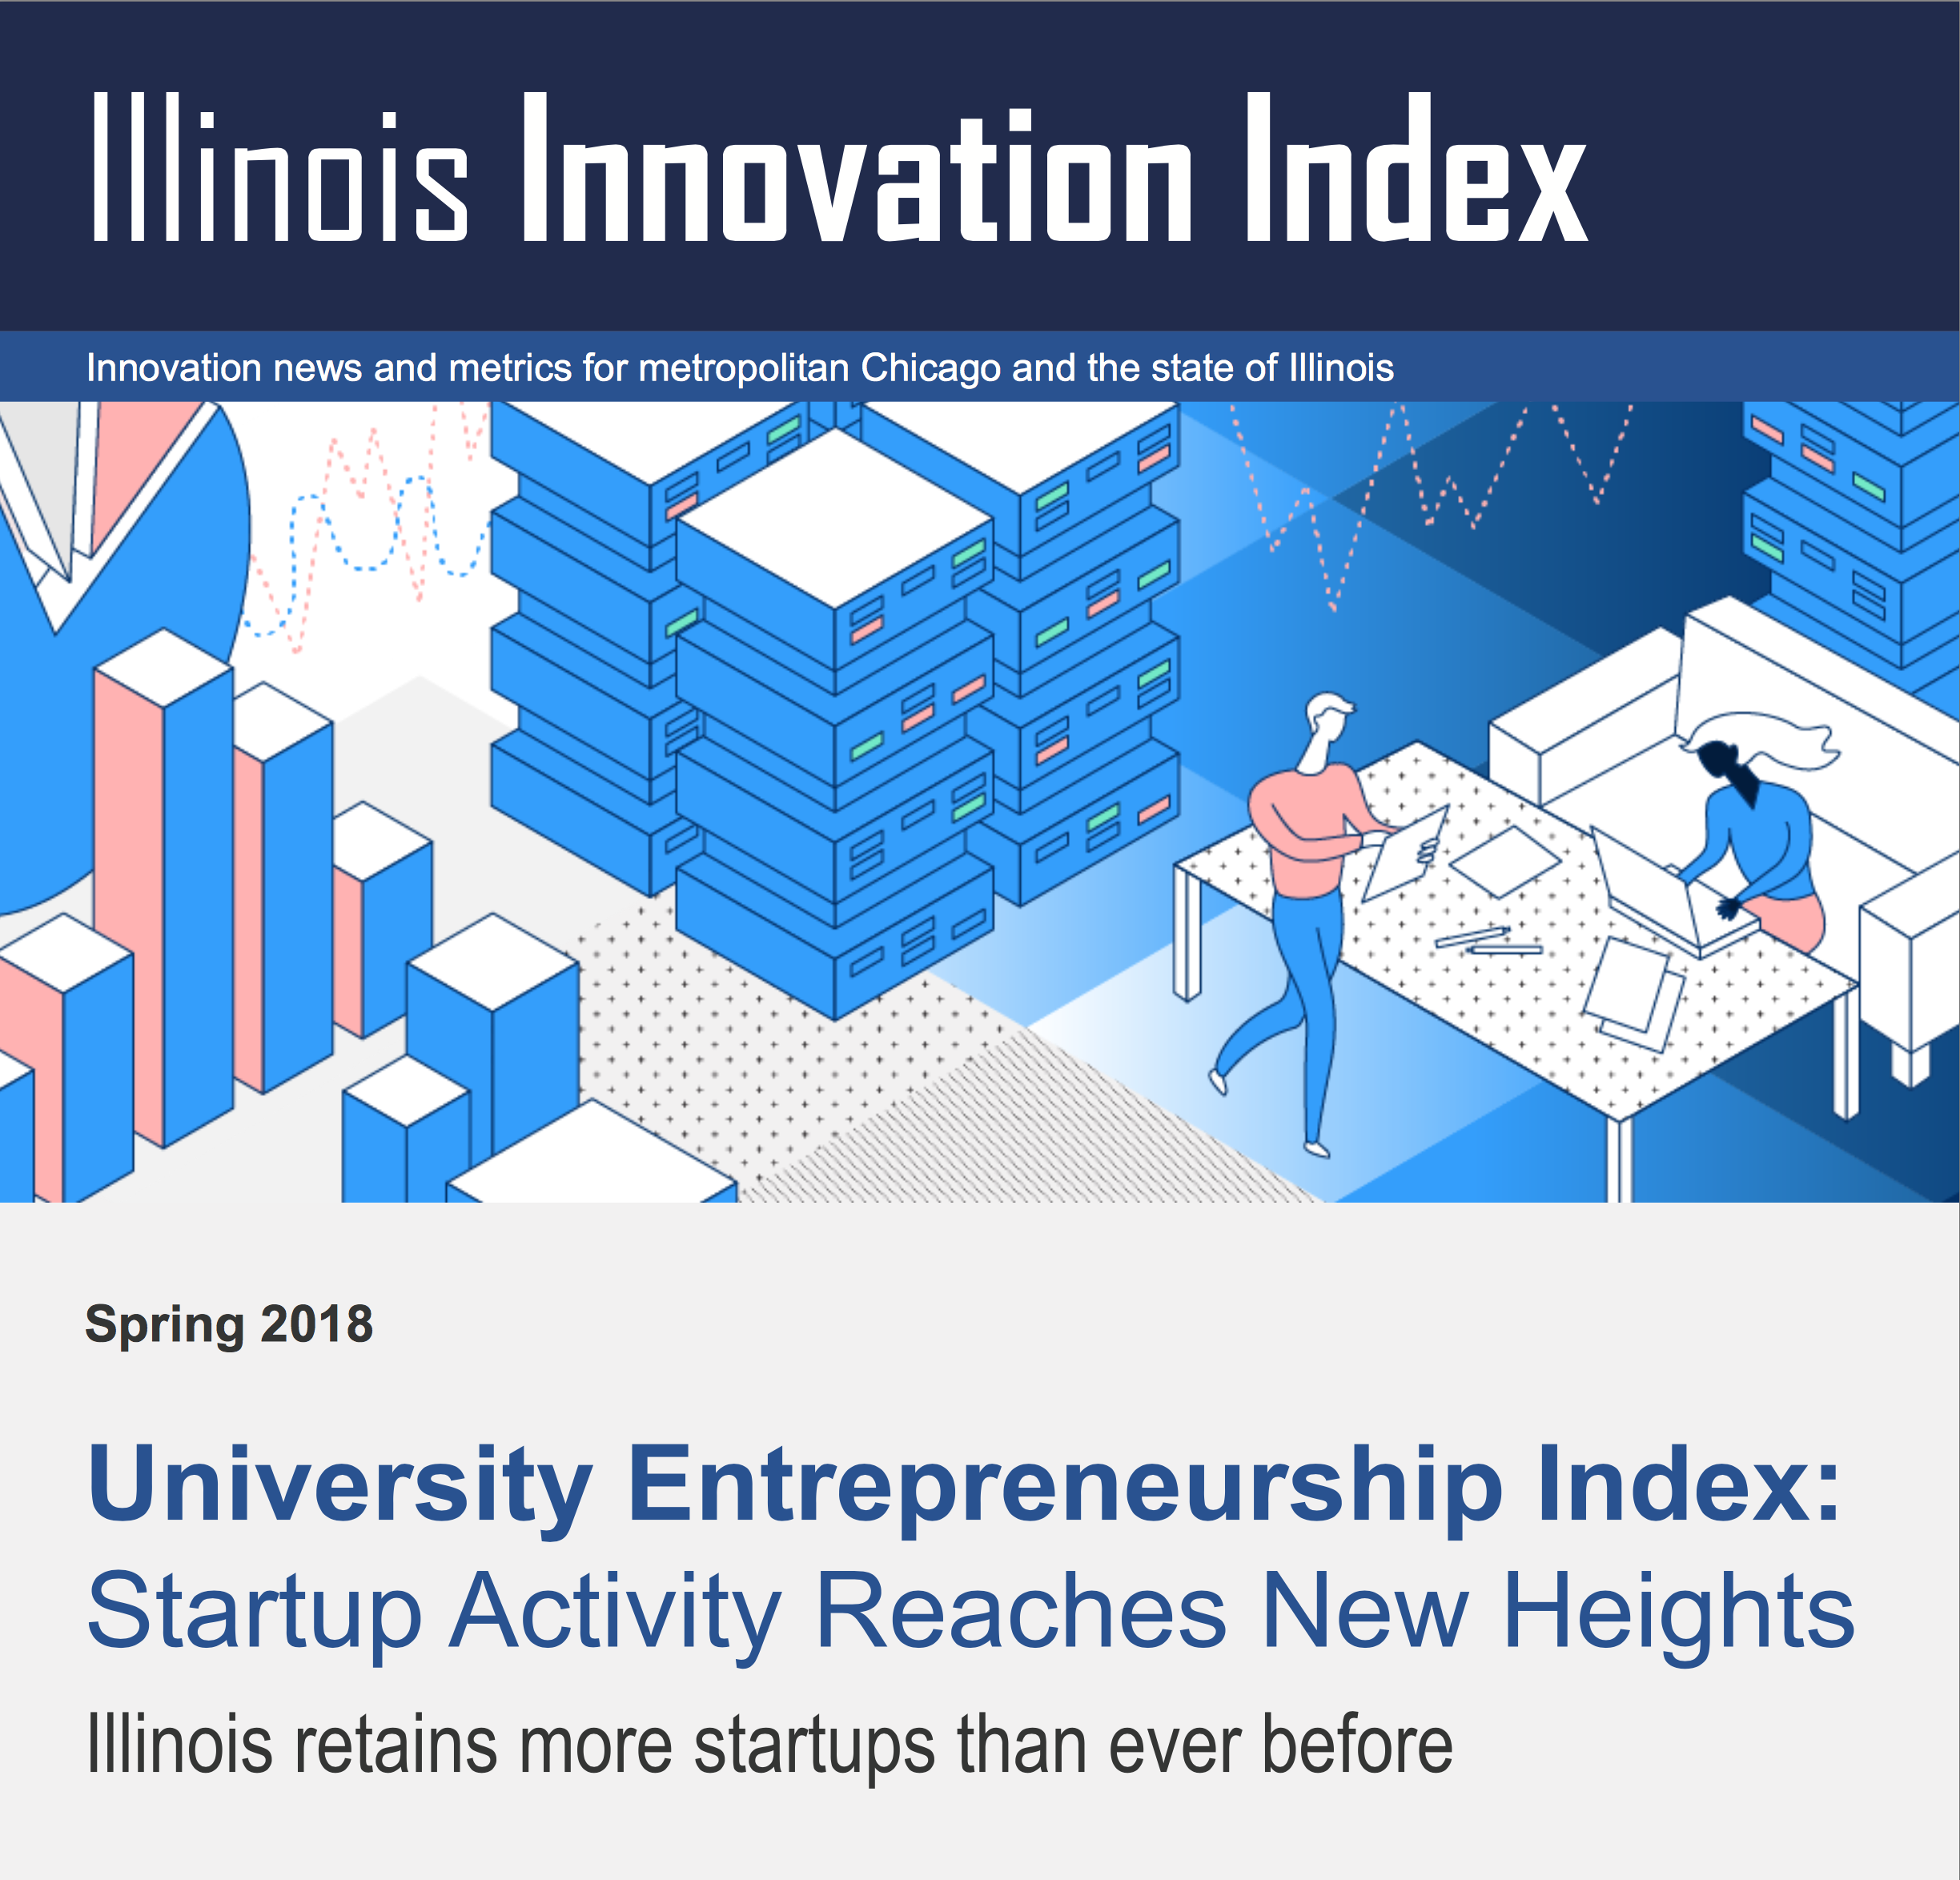 Illinois Innovation Index, Spring 2018